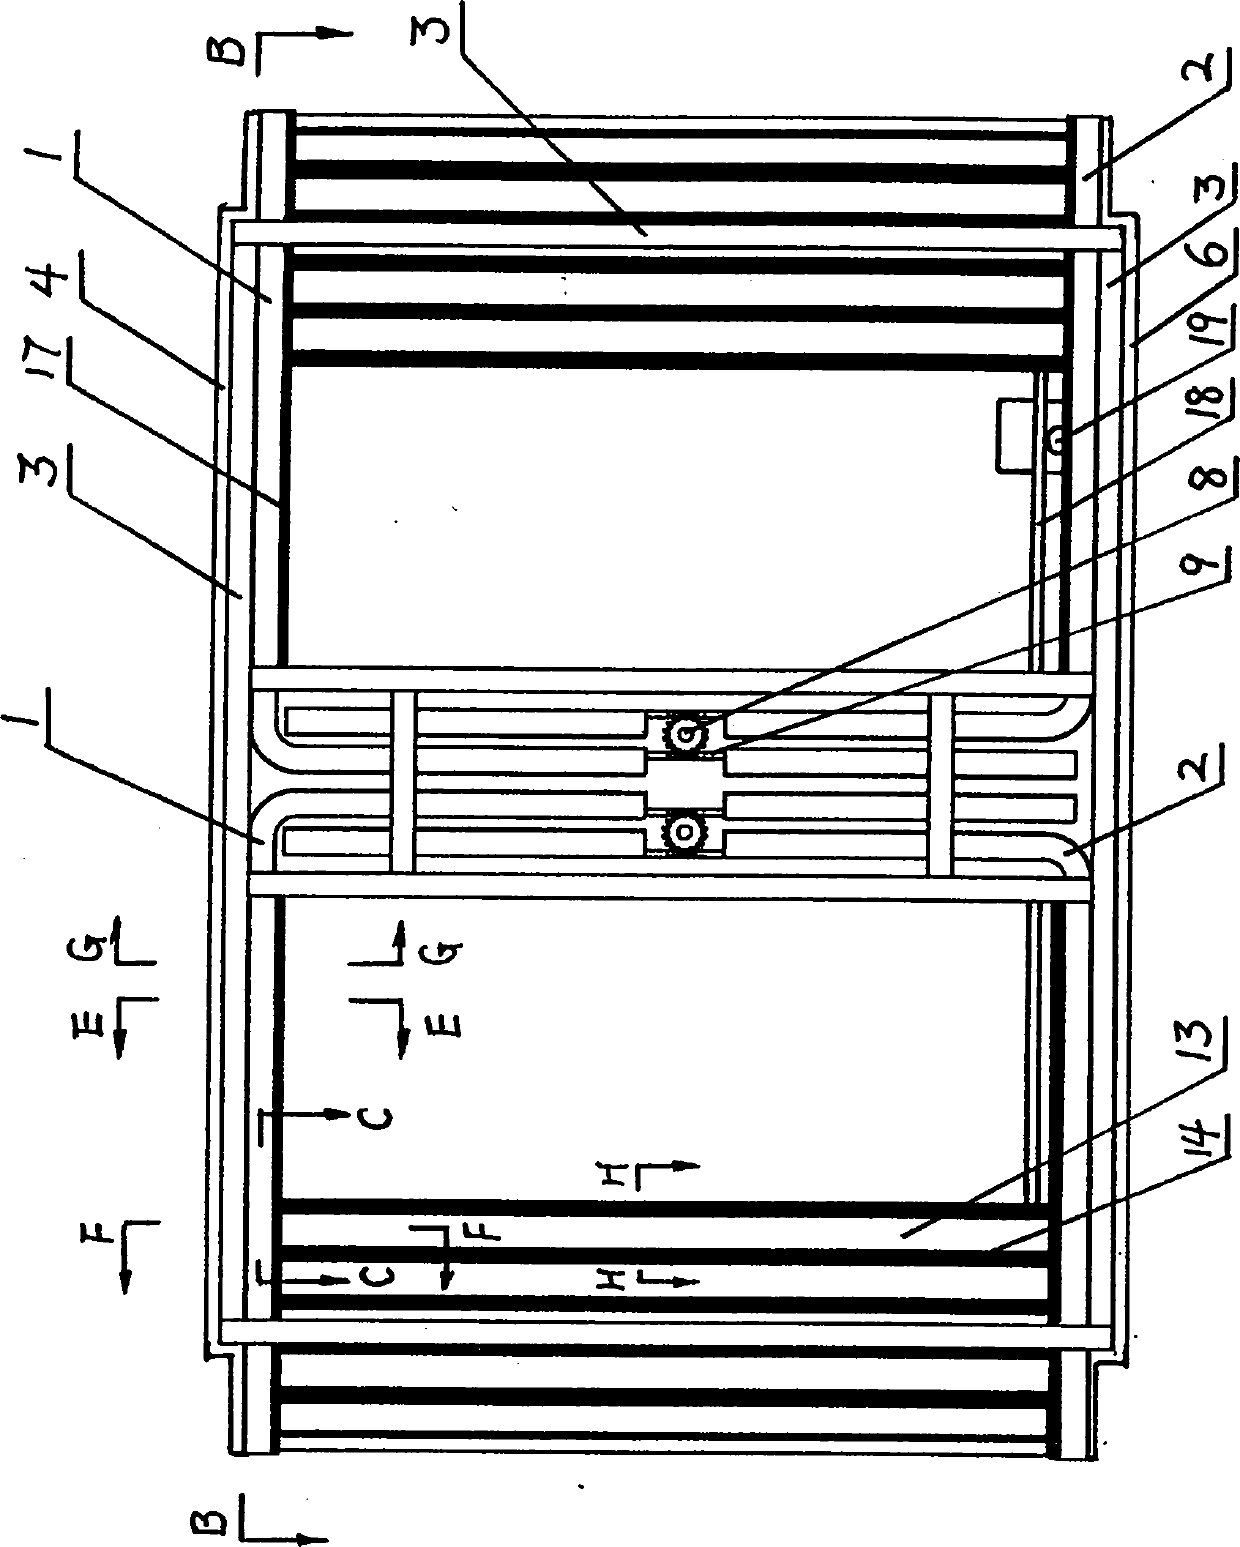 Conveying door structure of cold storage